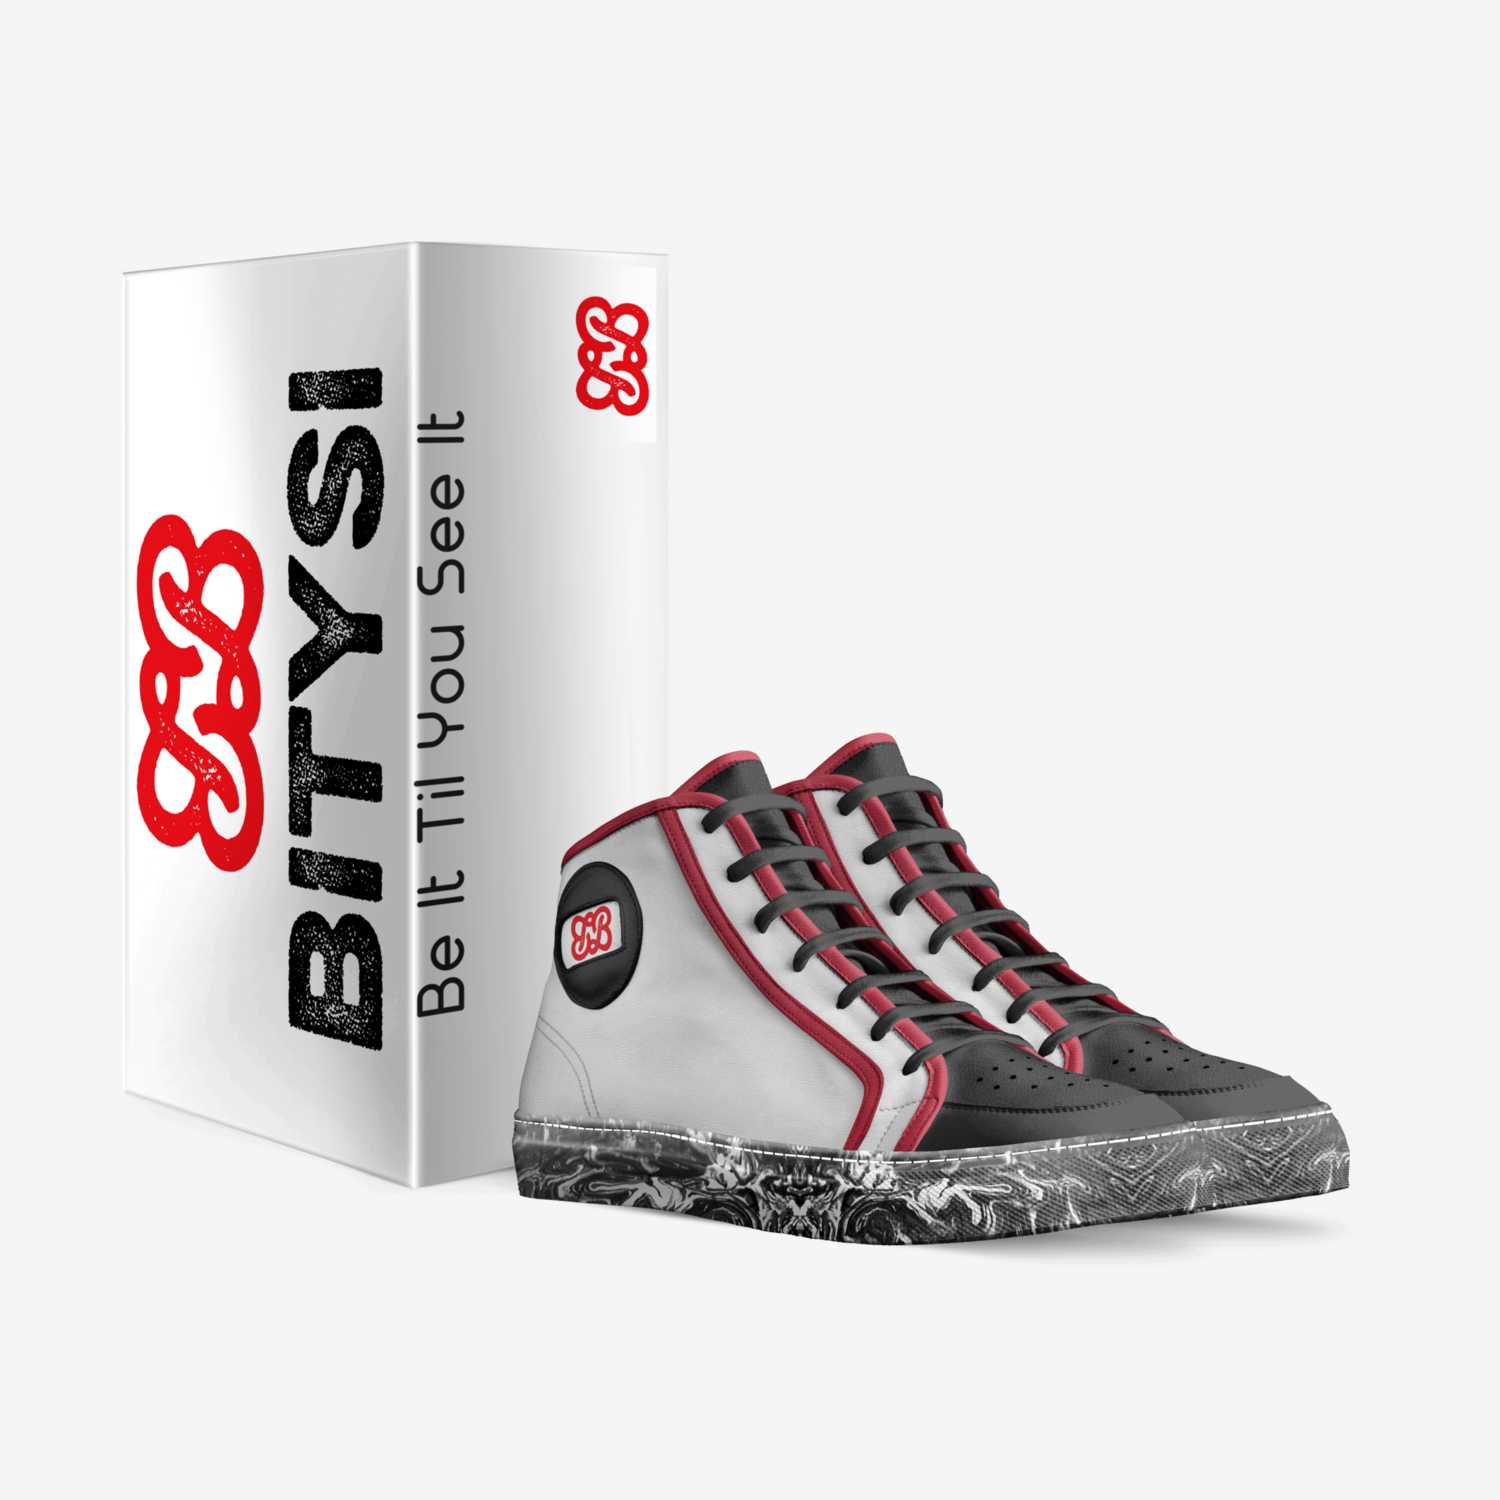 BITYSI Kickbacks  custom made in Italy shoes by Michael Pina | Box view